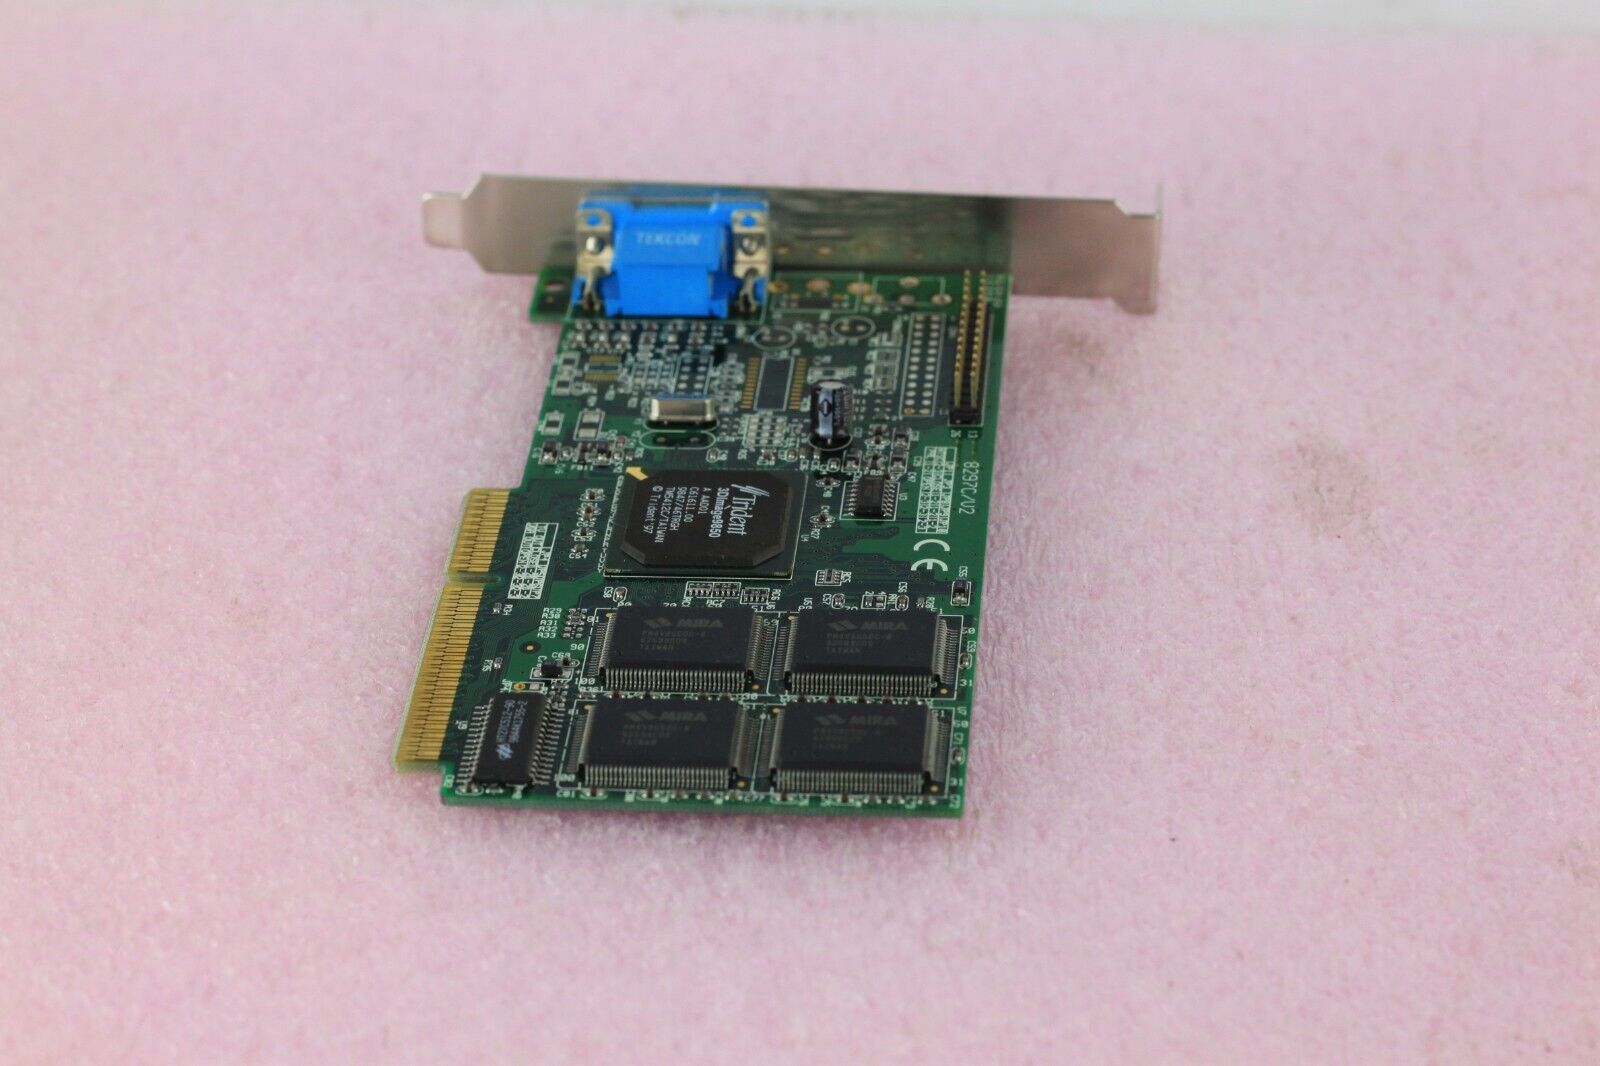 Trident 3DImage 9850 VGA AGP Graphics Card